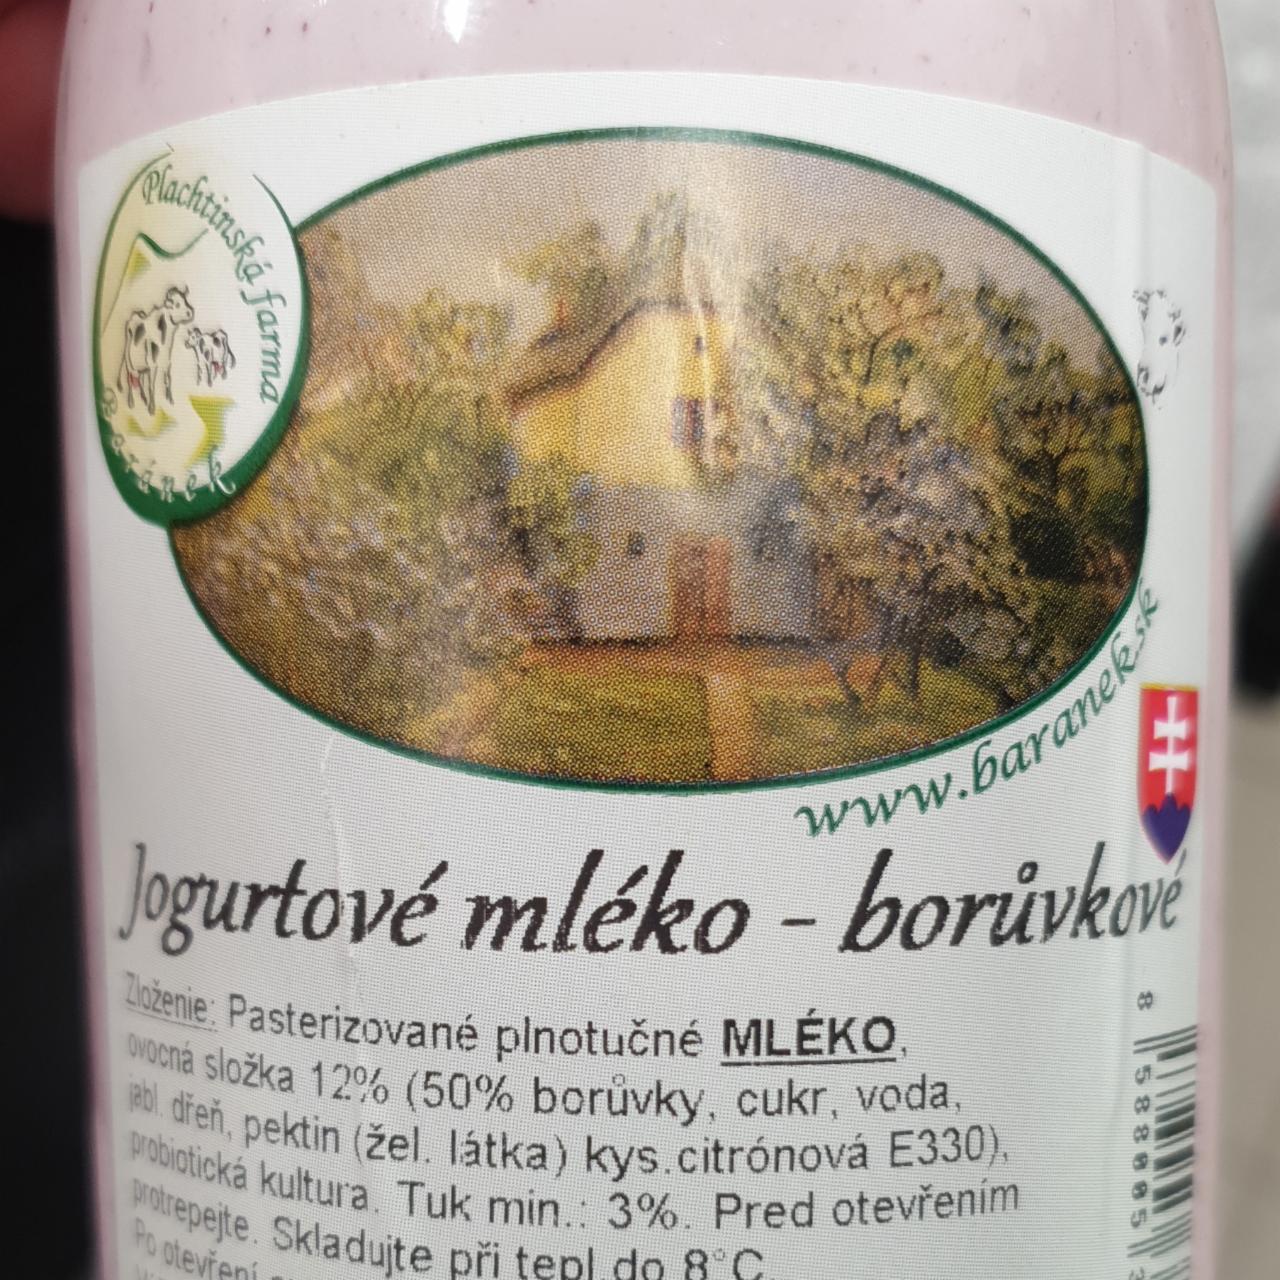 Fotografie - Jogurtové mléko borůvkové Farma Baránek